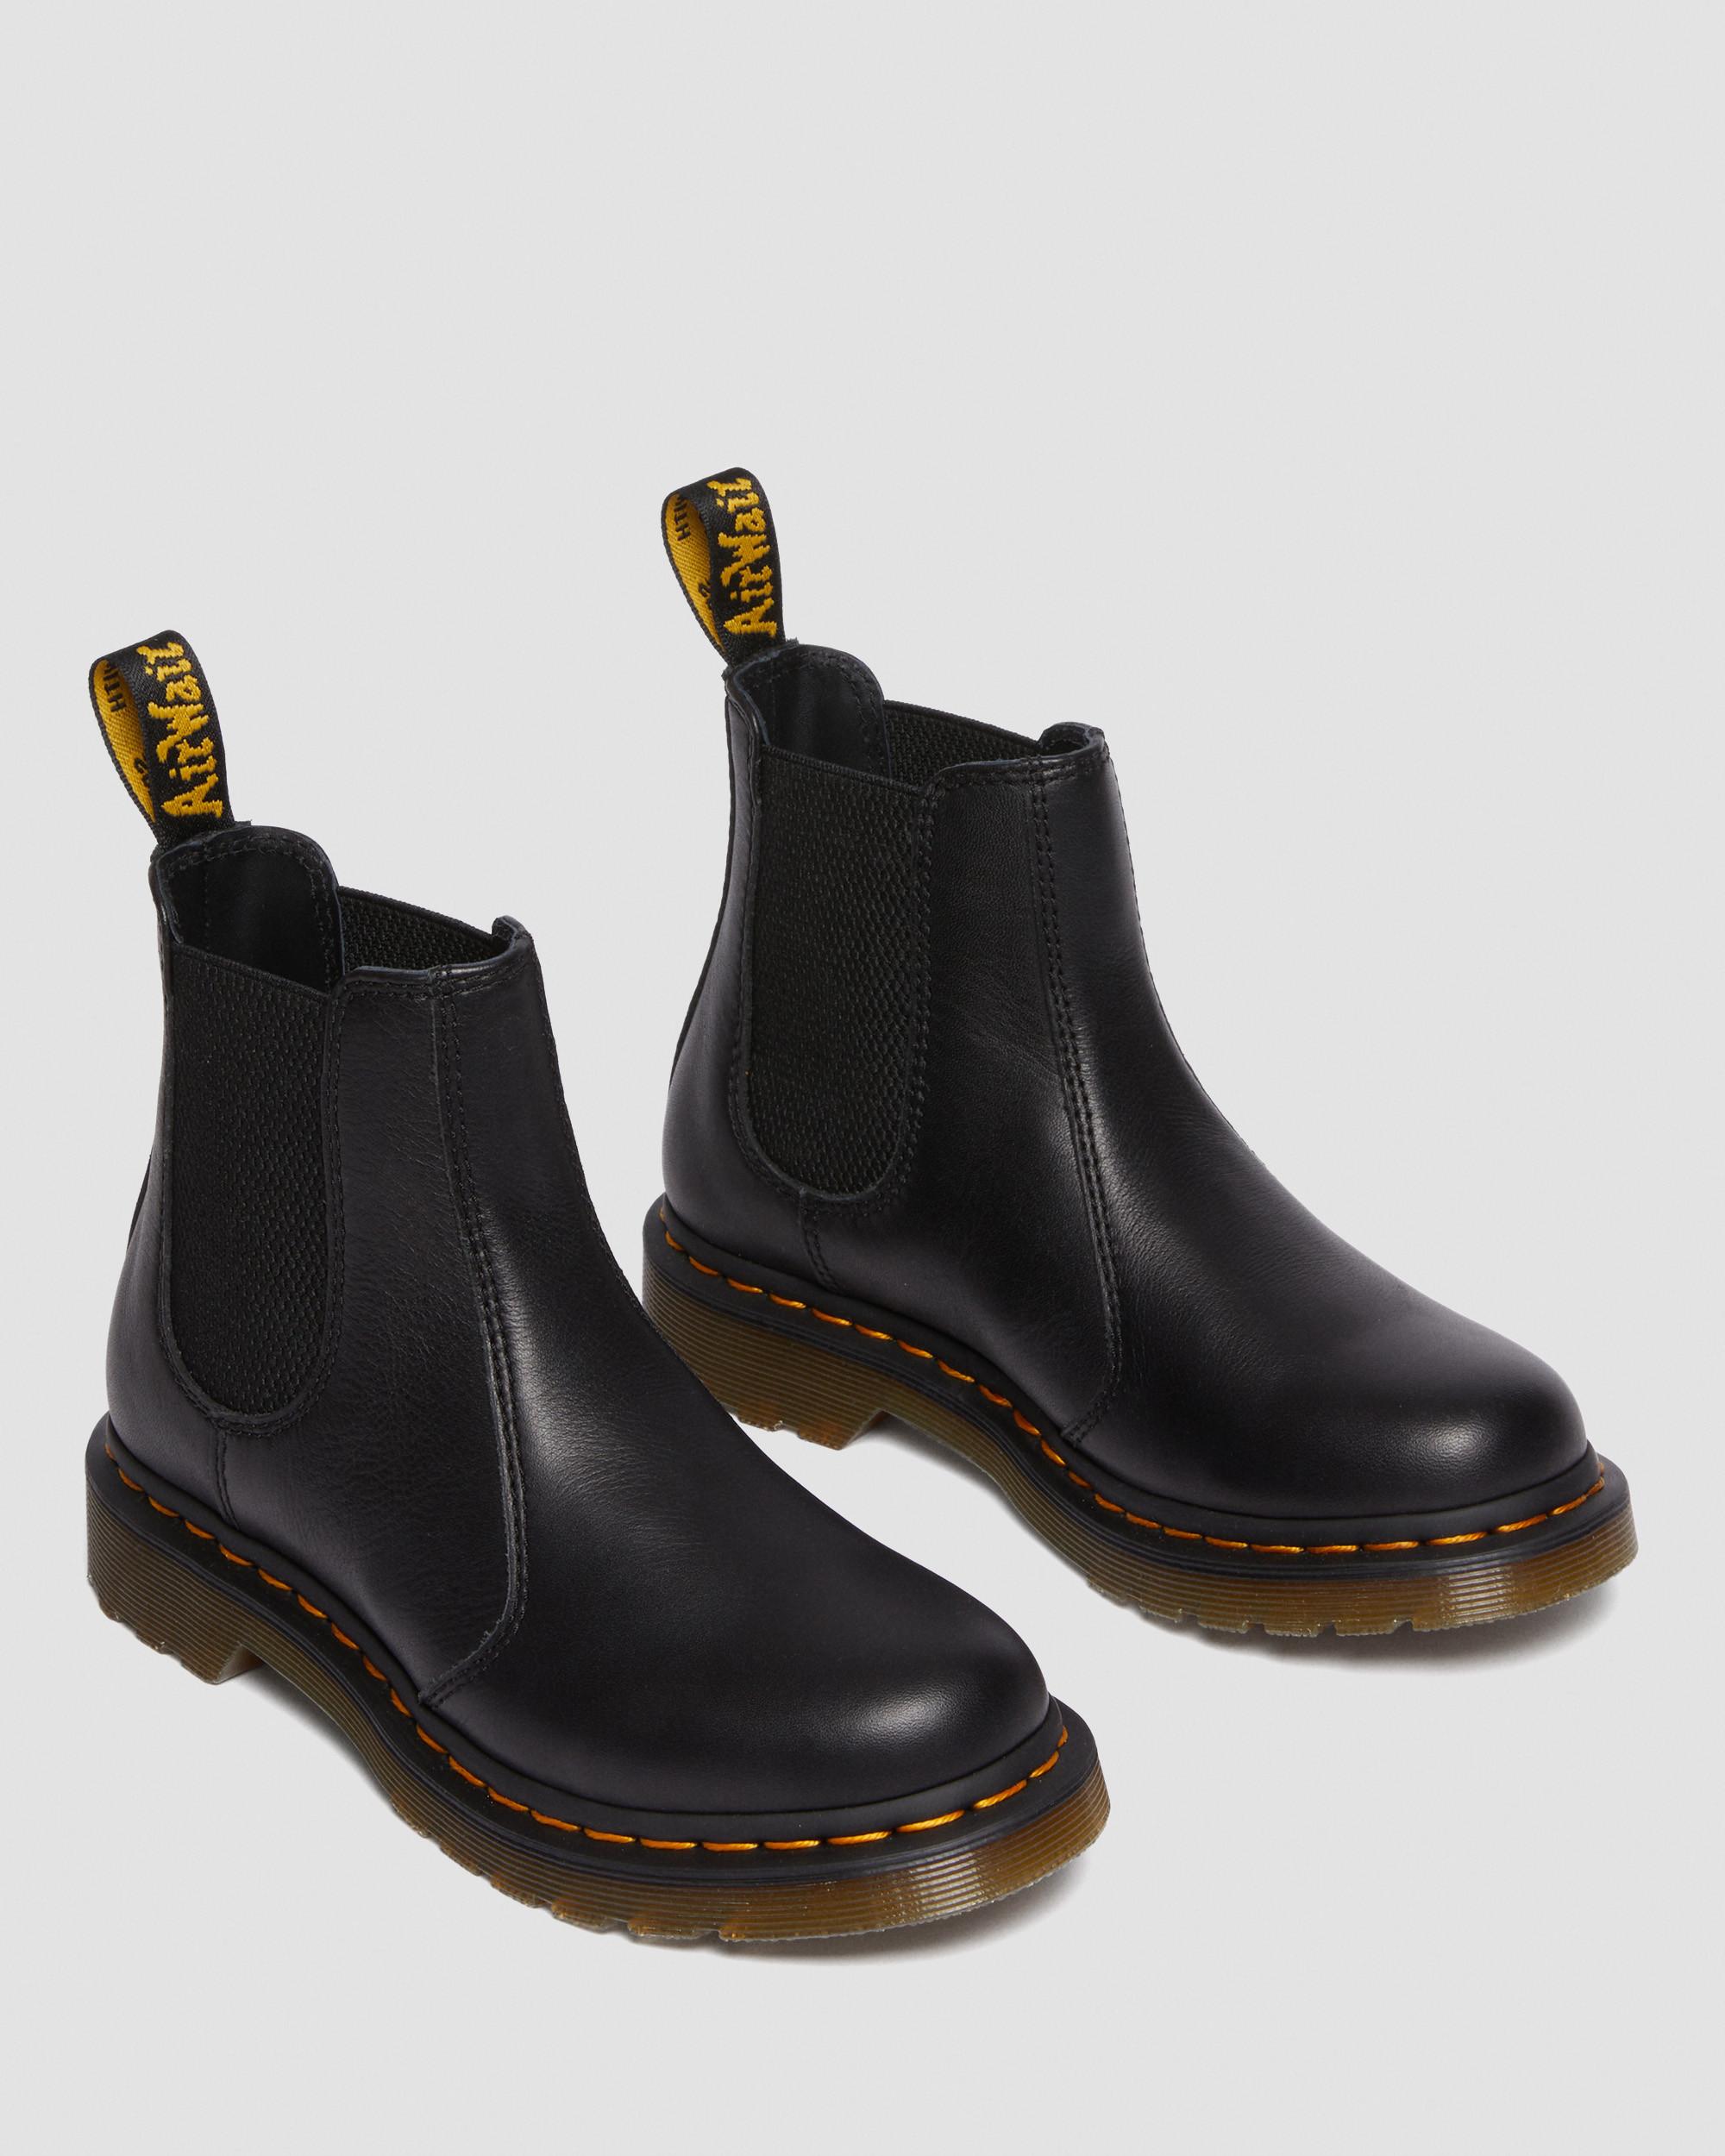 Dr. Martens Women's 1460 Leather 8-Eye Boots - Black